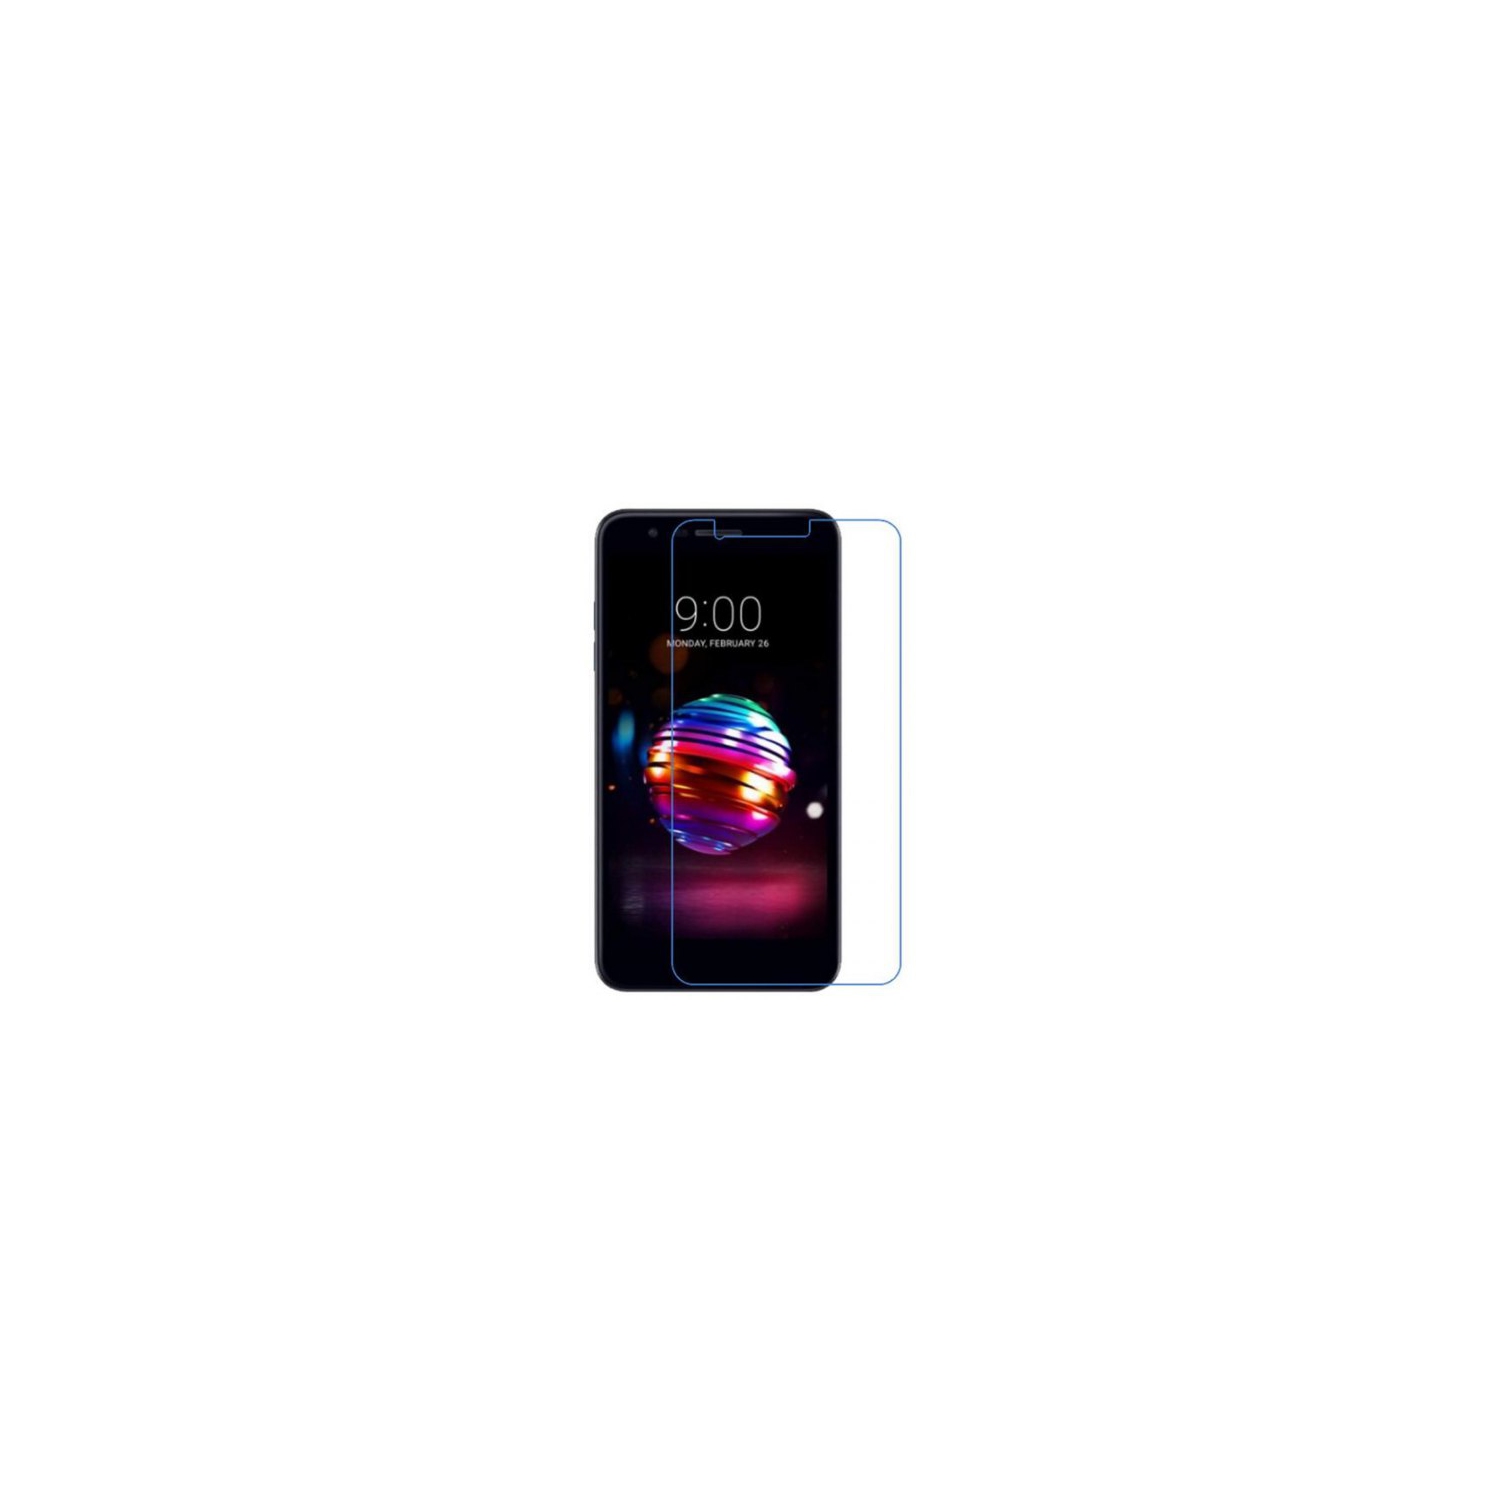 LG K9 / K10 (2018) - Premium Real Tempered Glass Screen Protector Film [Pro-Mobile]